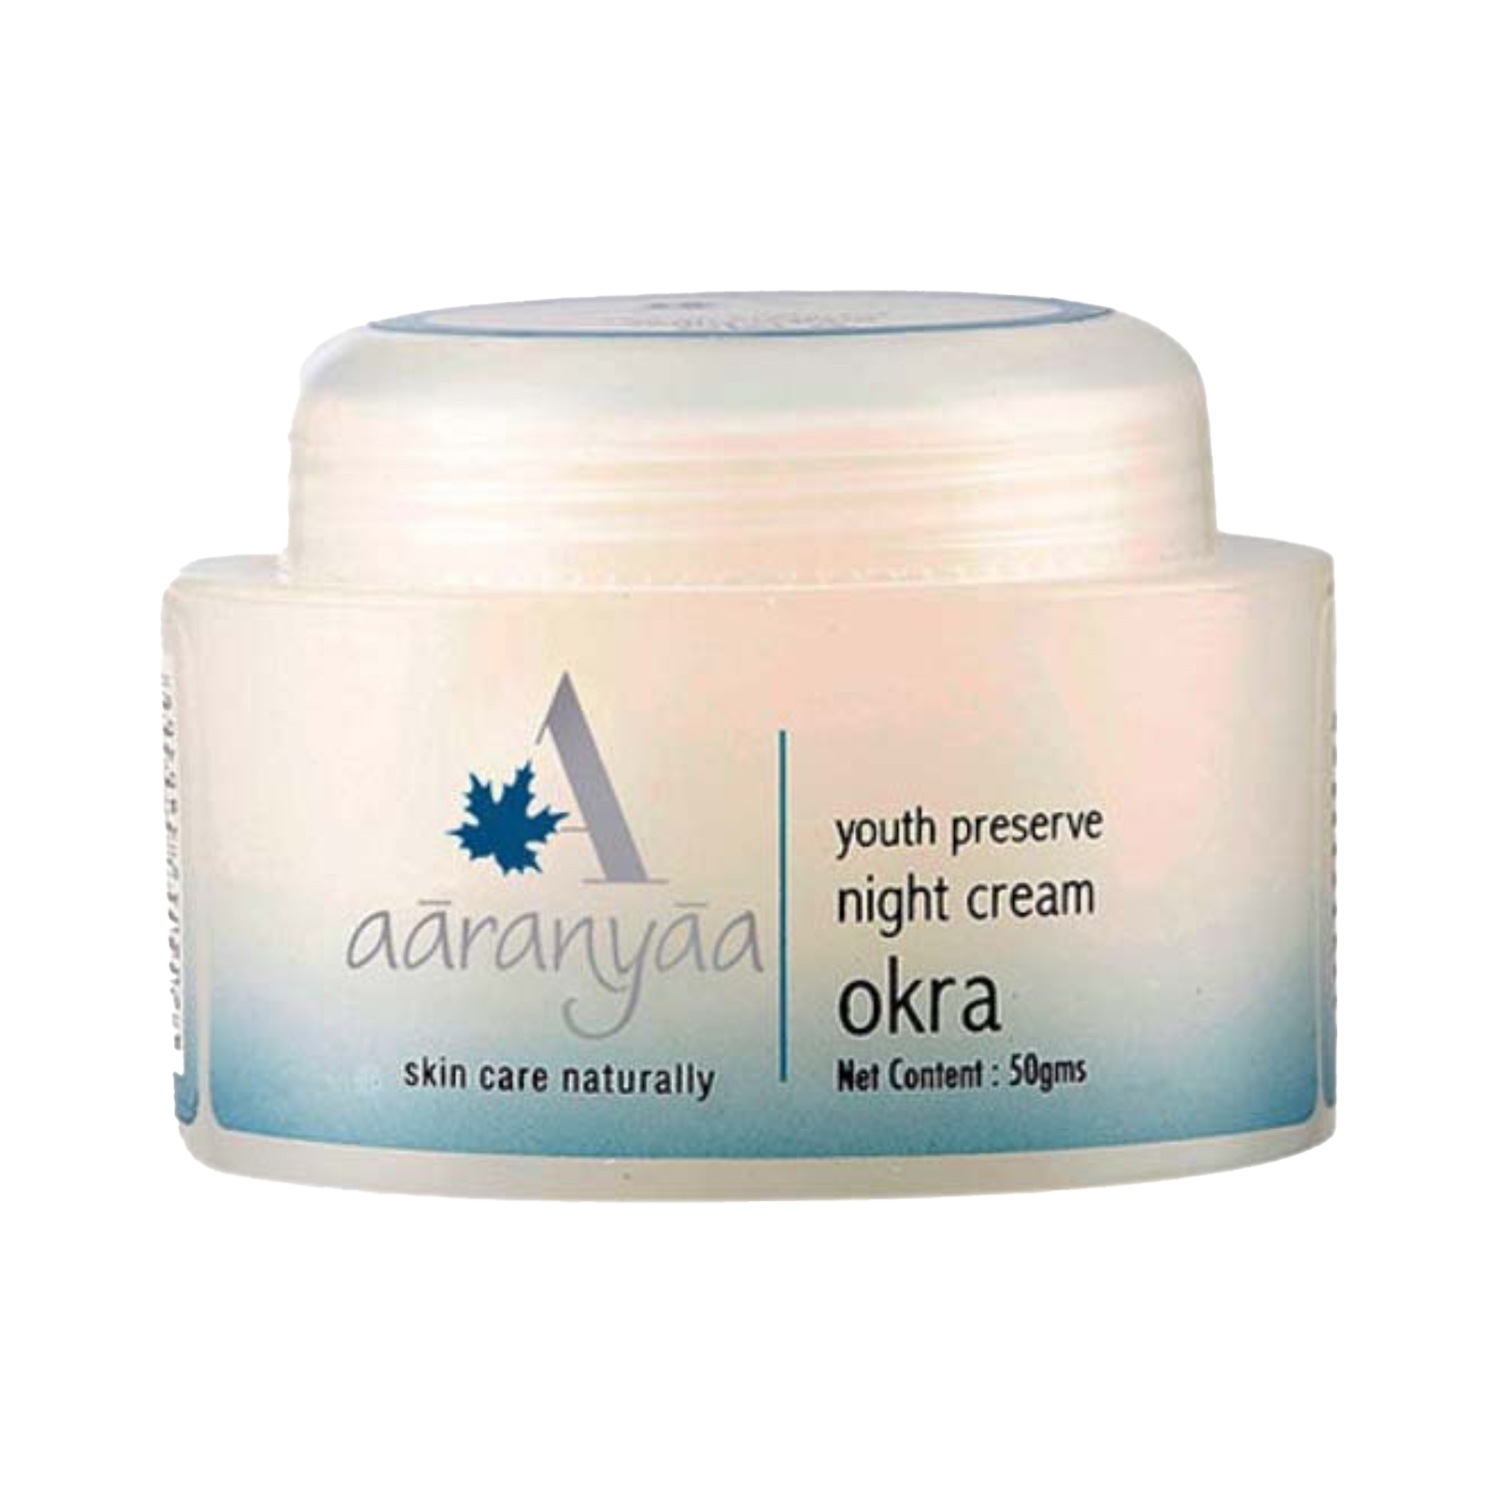 Aaranyaa Youth Preserve Okra Night Cream (50g)